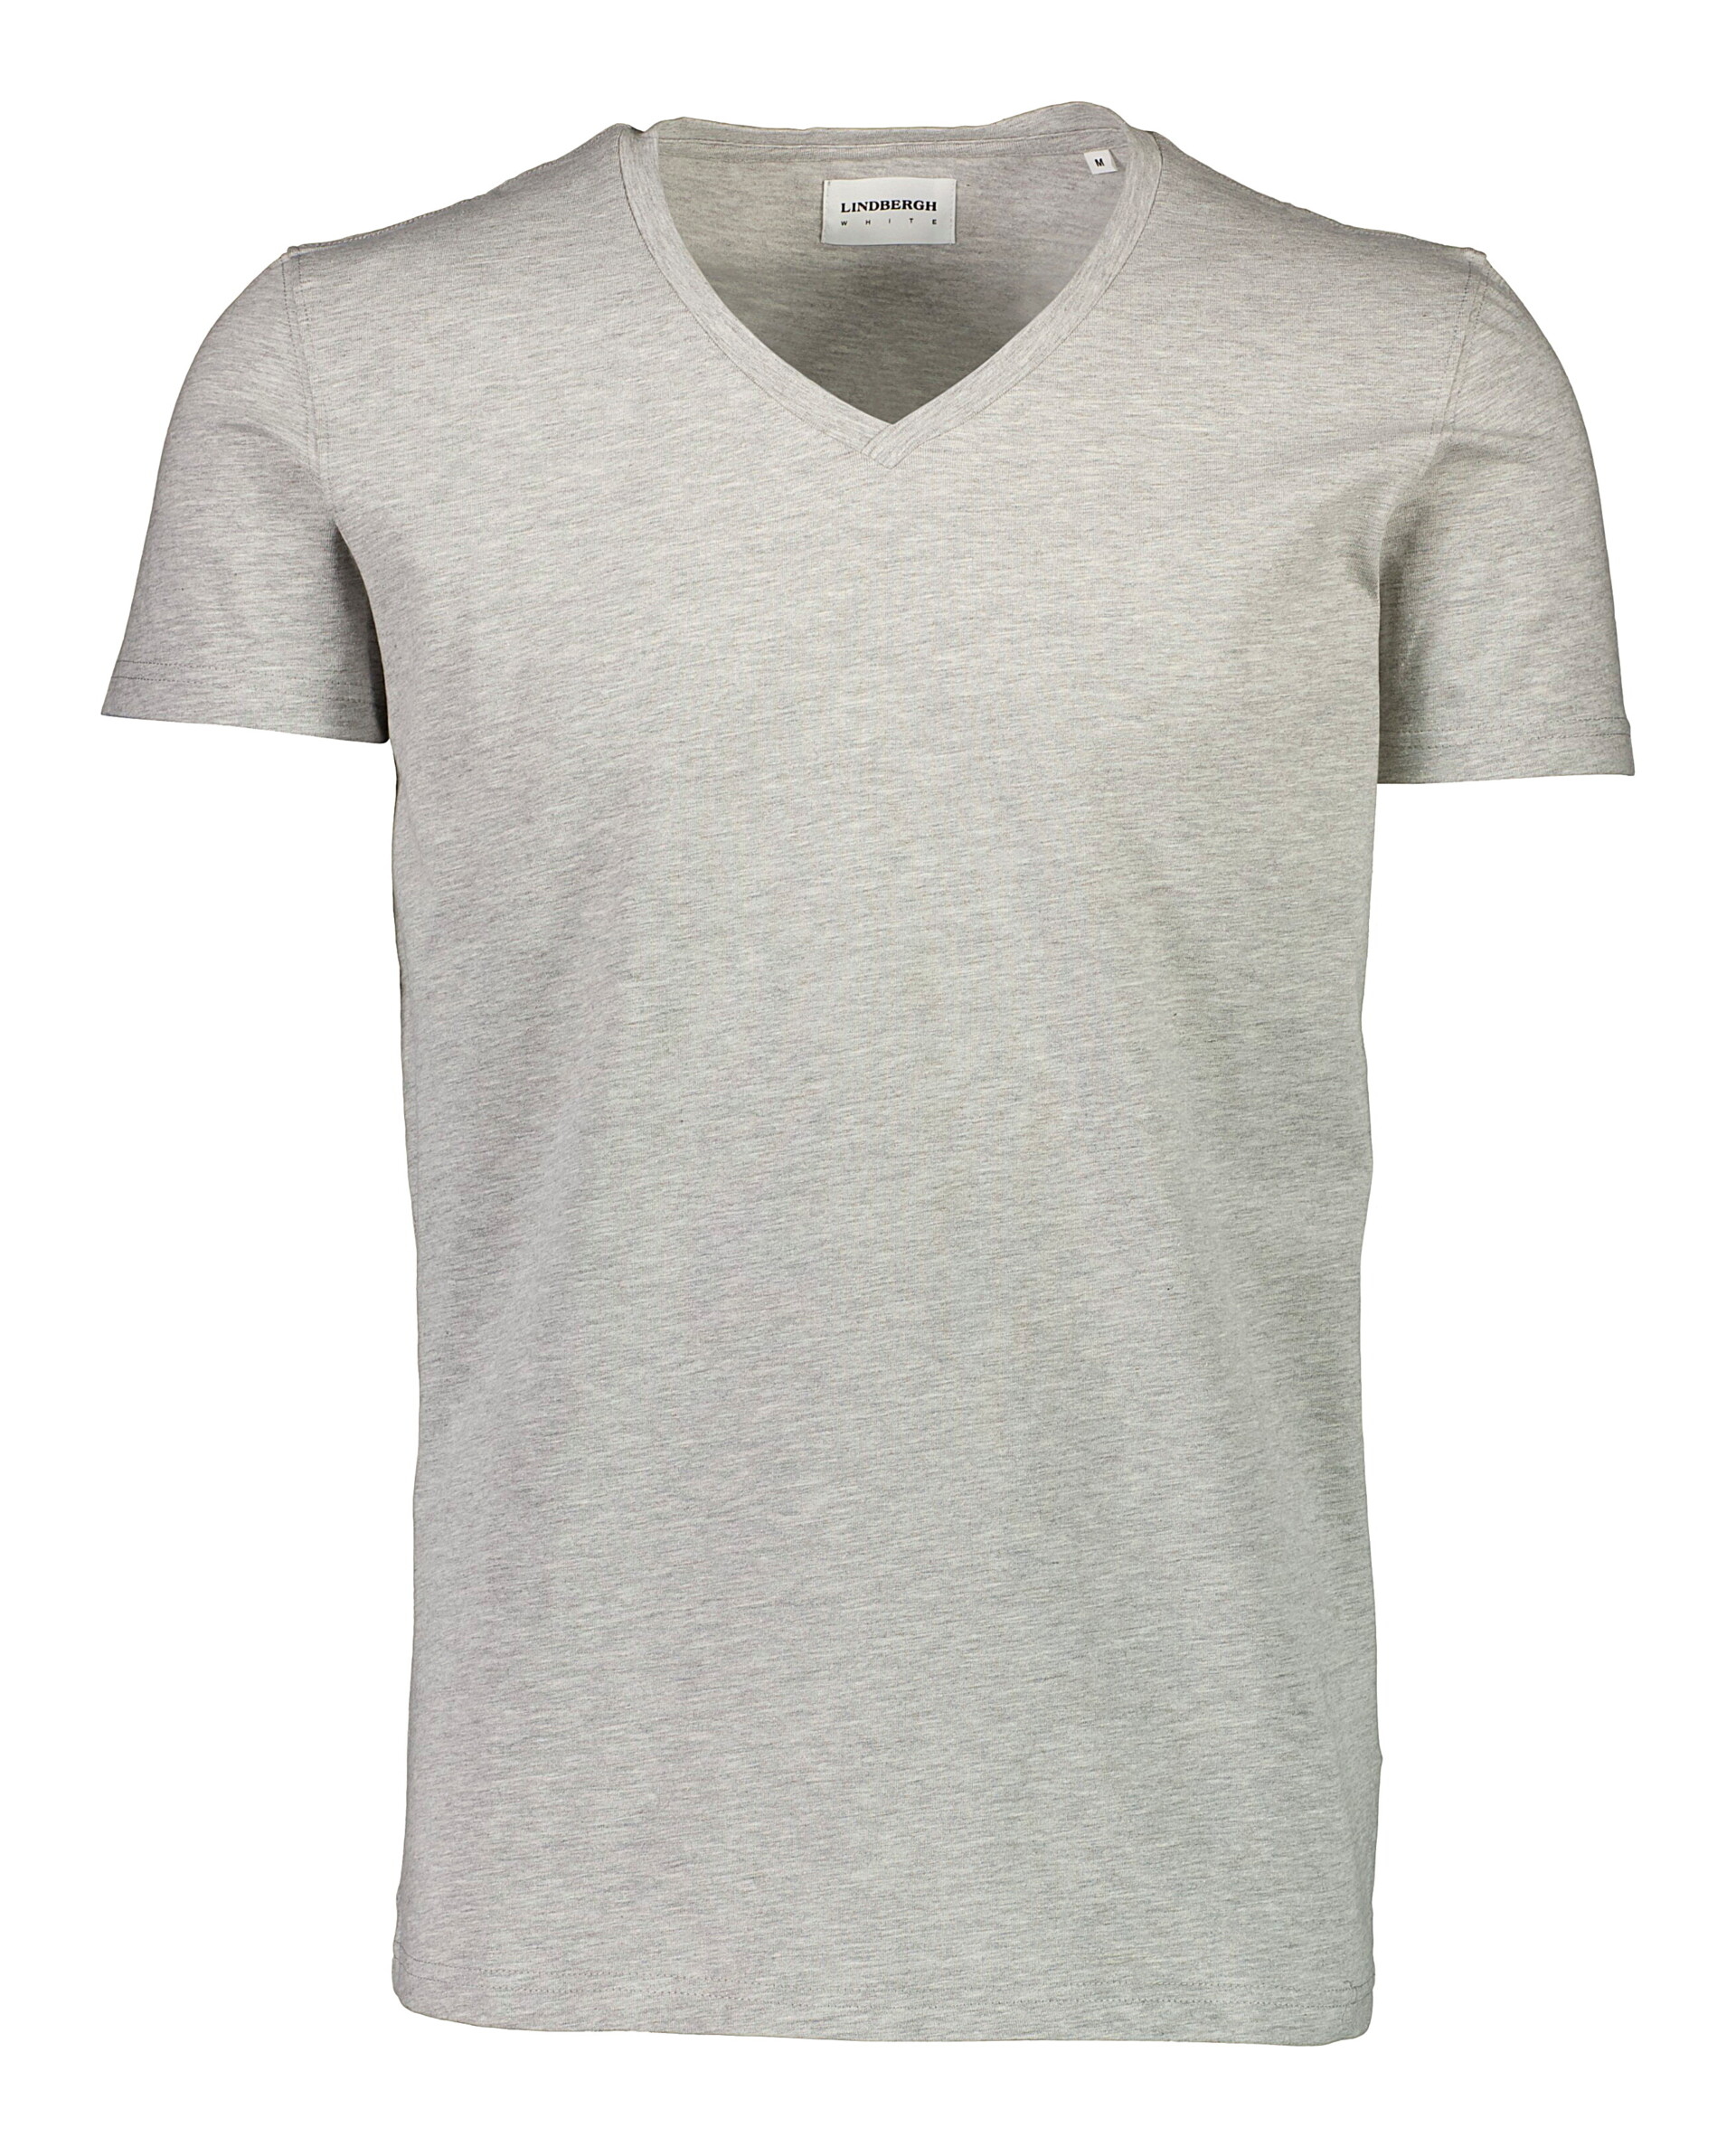 Lindbergh T-shirt grau / grey mel